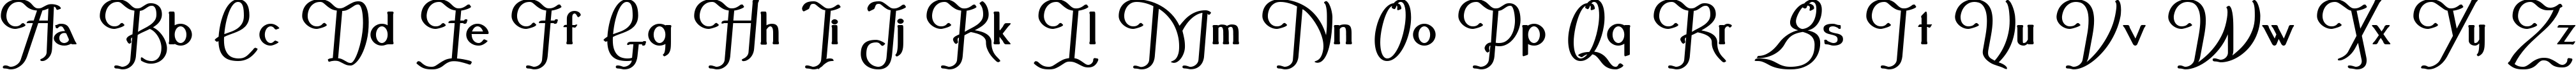 Пример написания английского алфавита шрифтом FestivalFlourish Bold